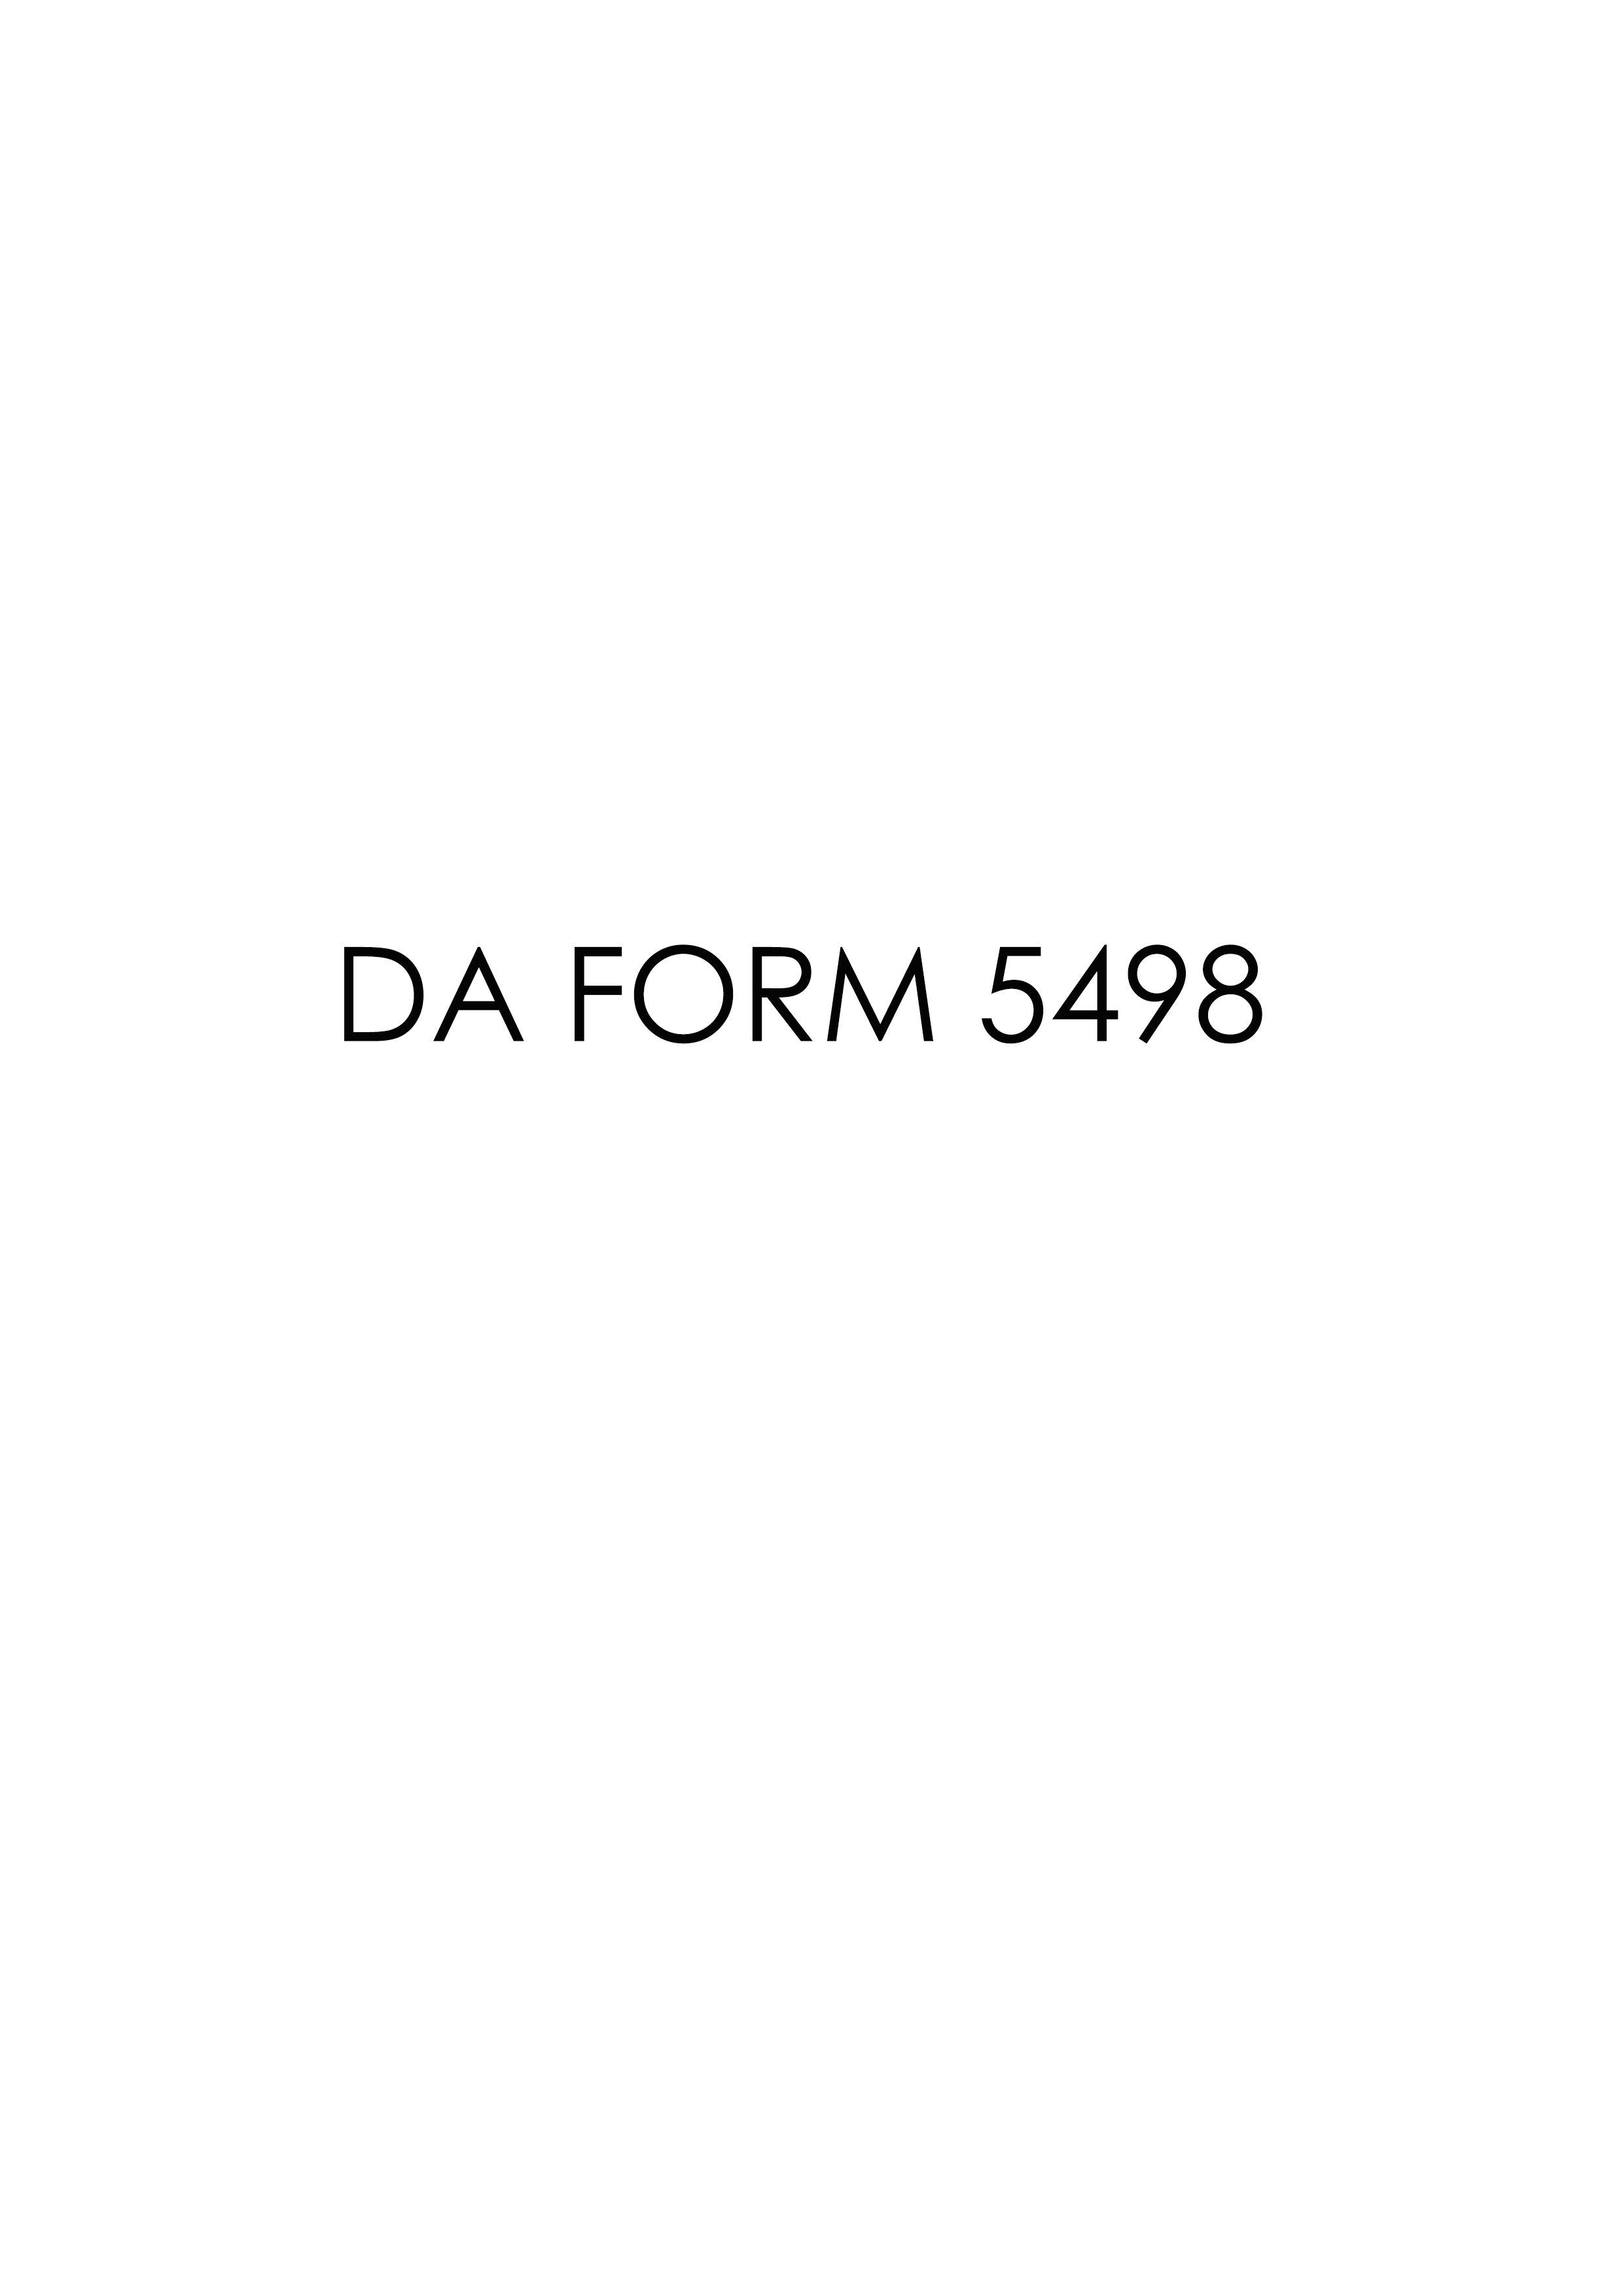 da Form 5498 fillable